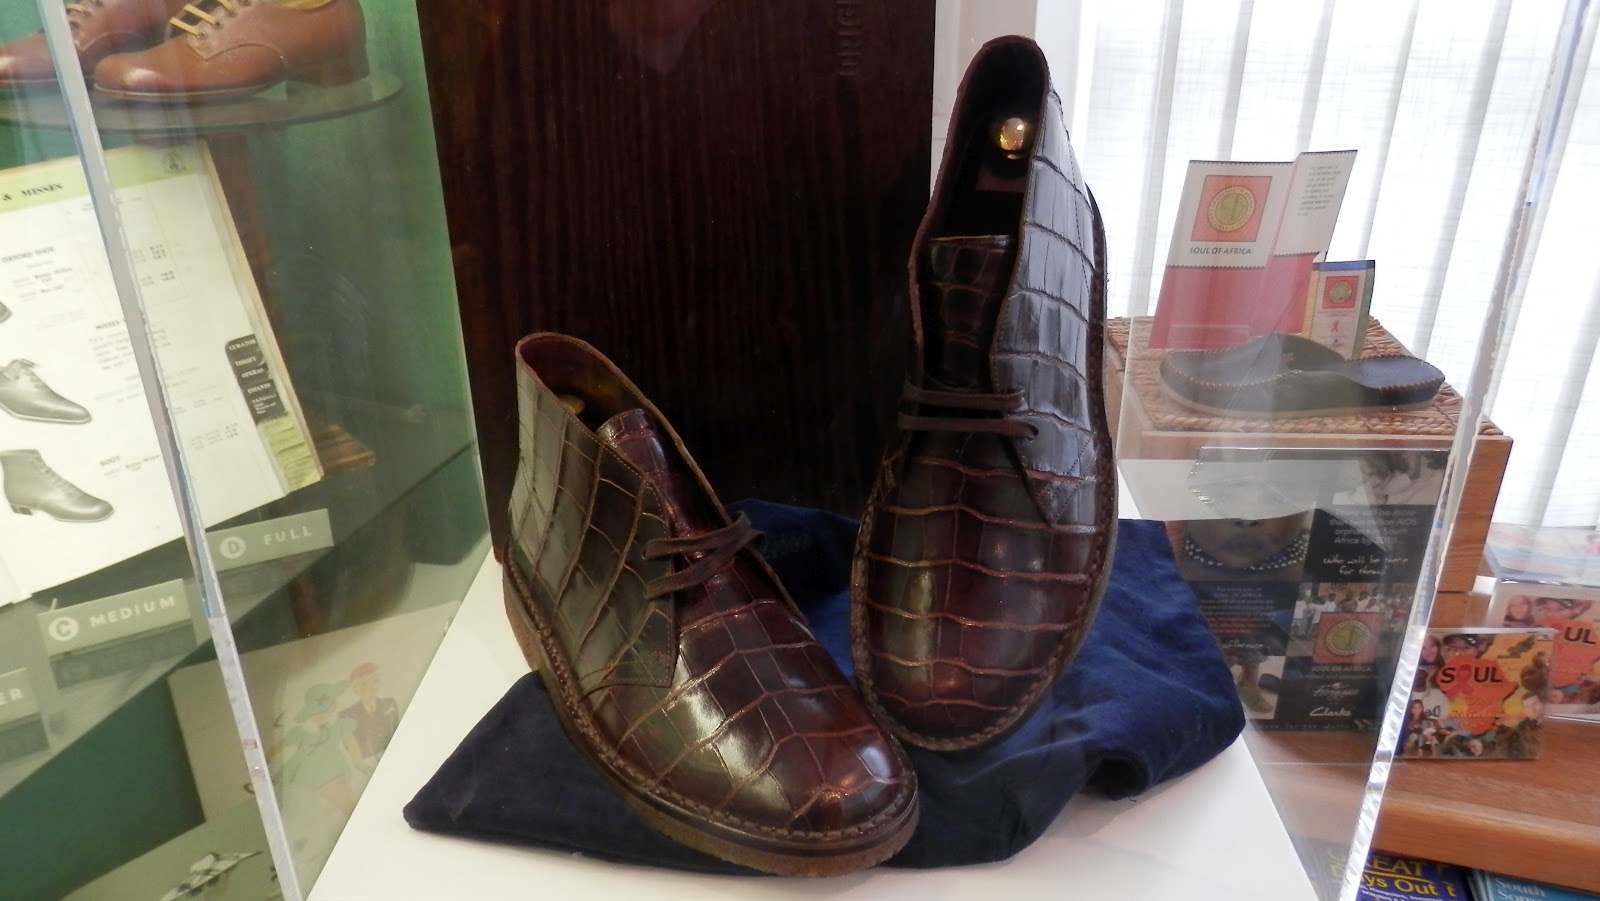 clarks shoe museum